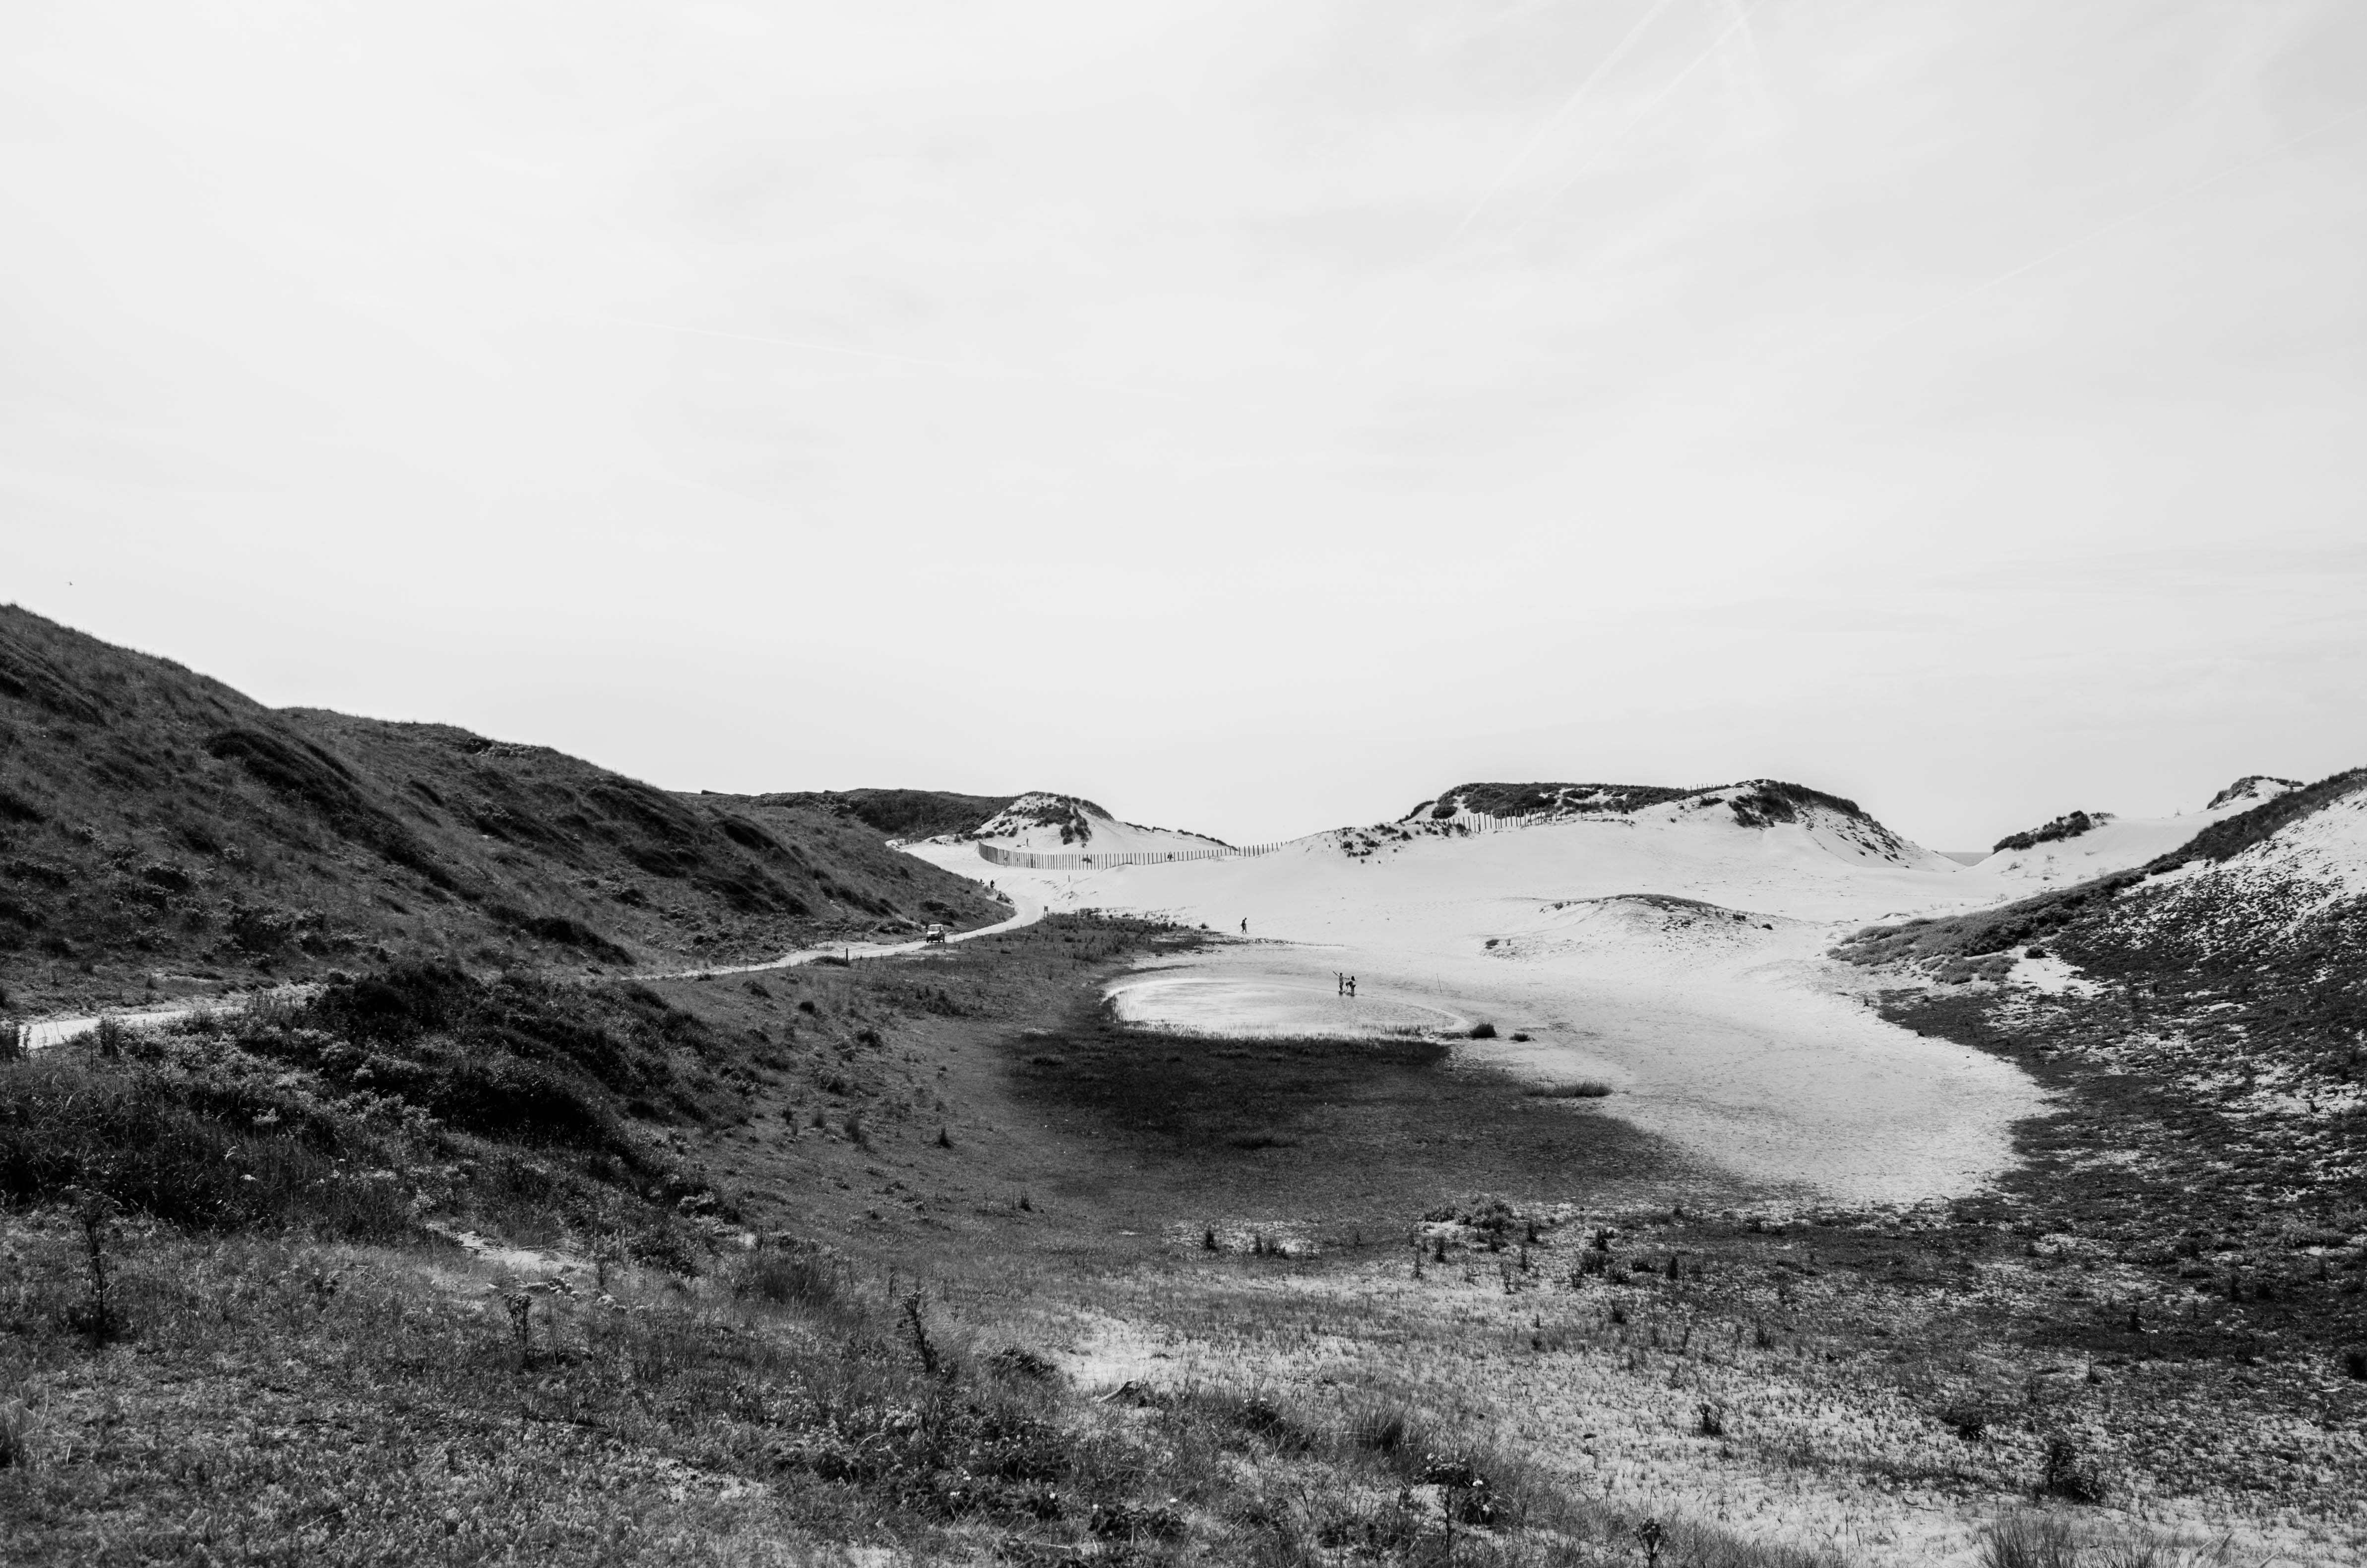 spectacular view of the dunes in Nationaal Park Zuid Kennemerland near Zandvoort in the Netherlands